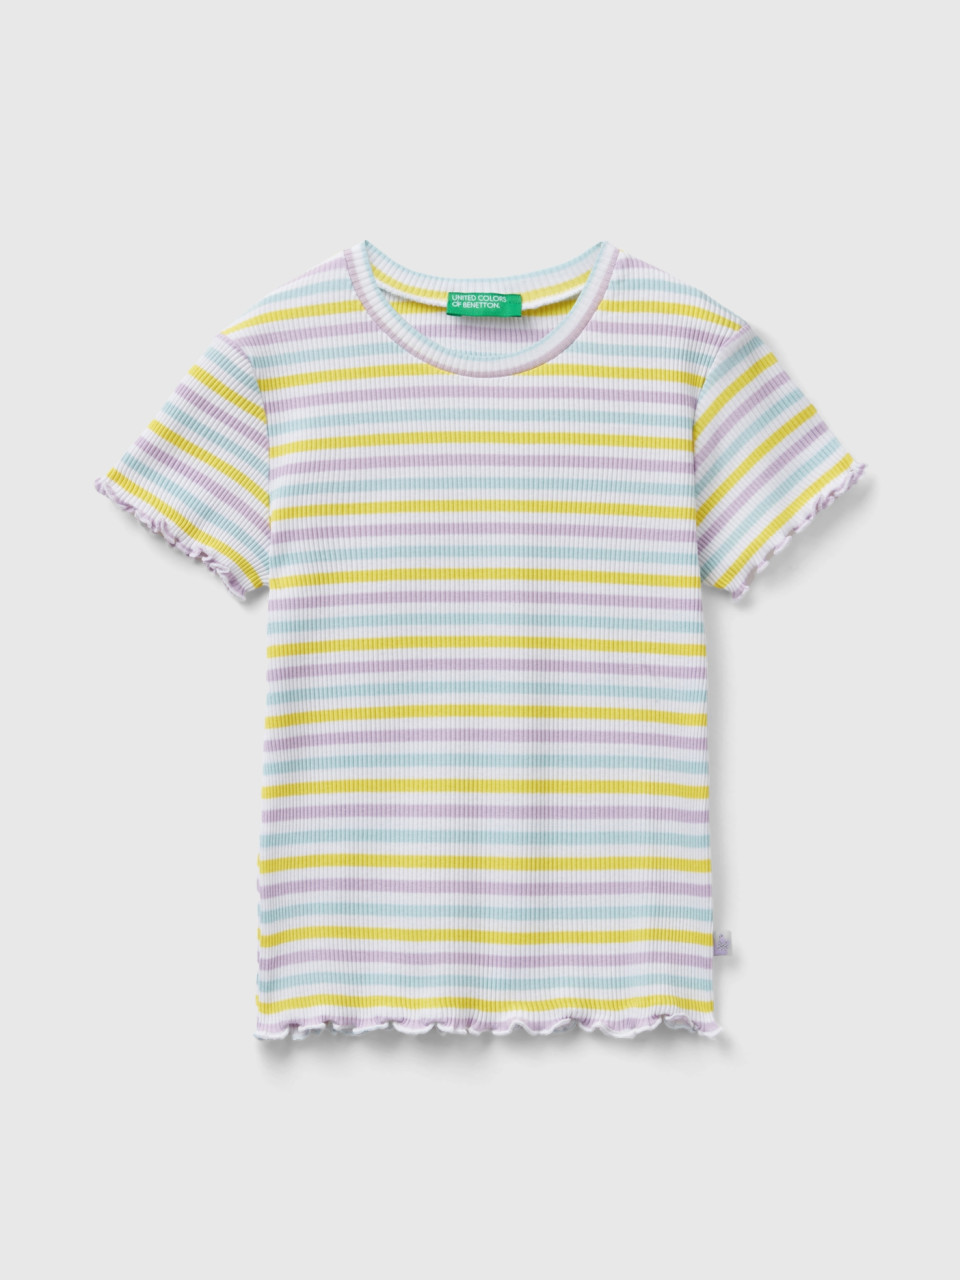 Benetton, Striped Stretch Cotton T-shirt, Yellow, Kids